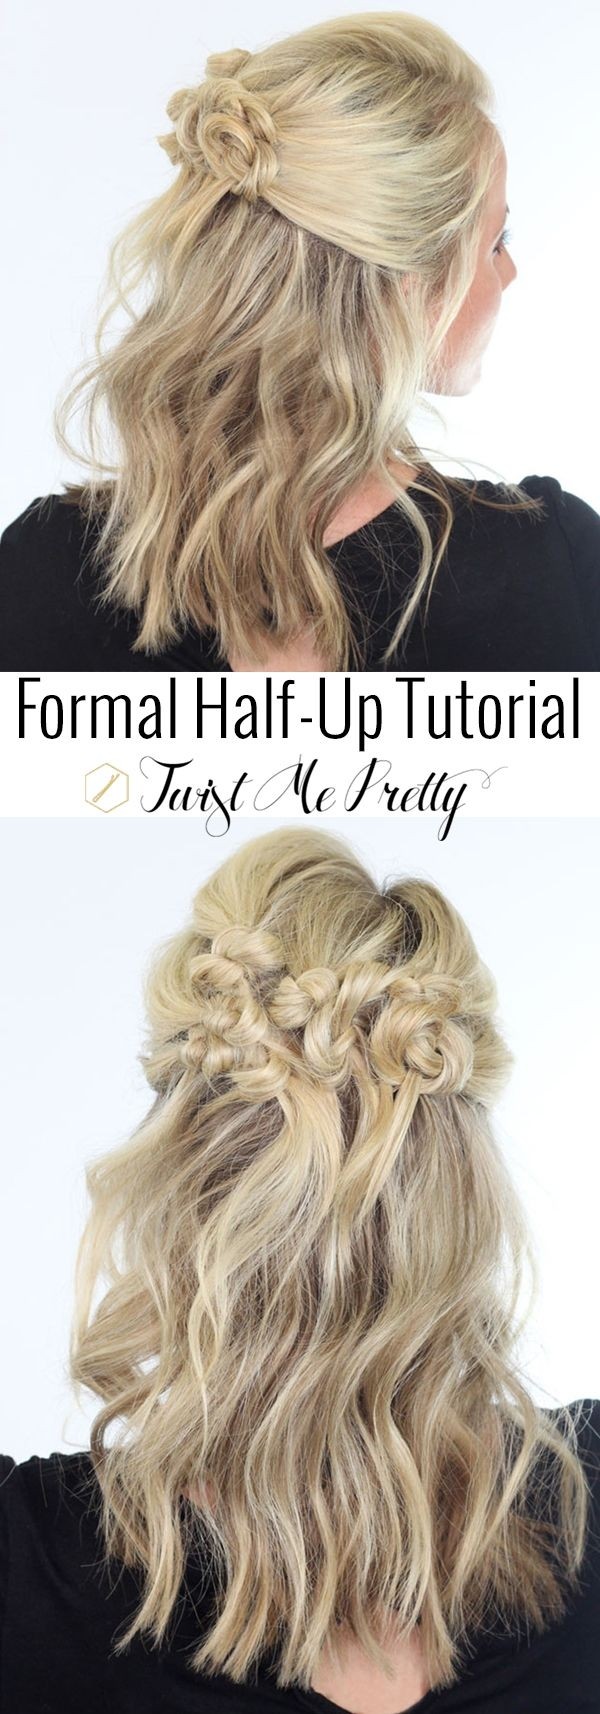 Pretty Half-up Hair Style Tutorial - Medium Hairstyle Ideas